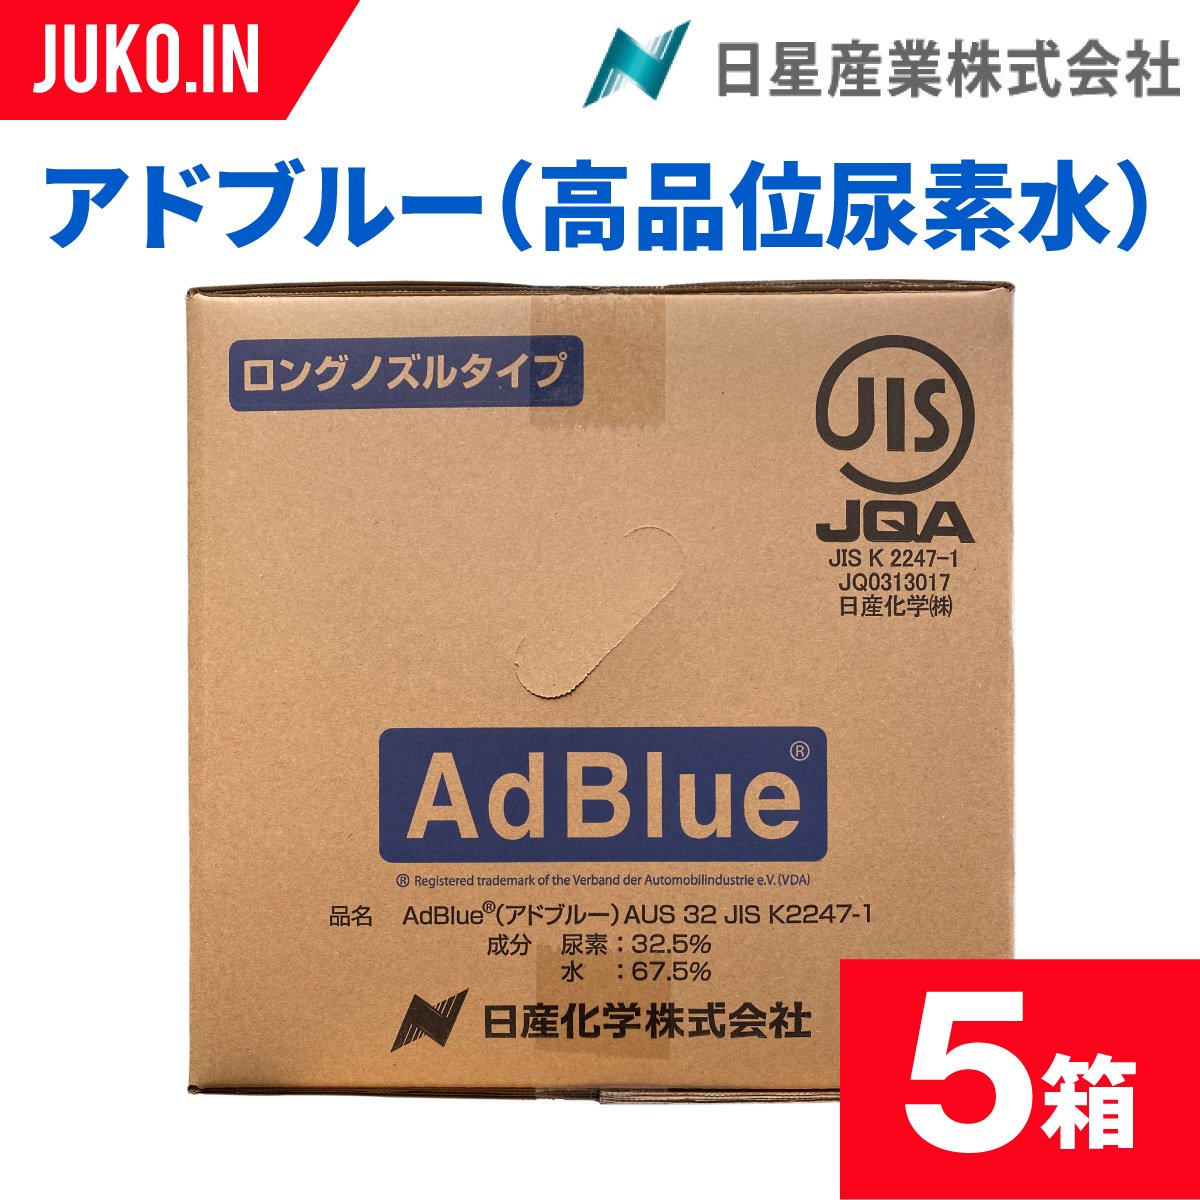 AdBlue|国産アドブルー|20L 5箱|高品位尿素水|バッグインボックス|日星産業